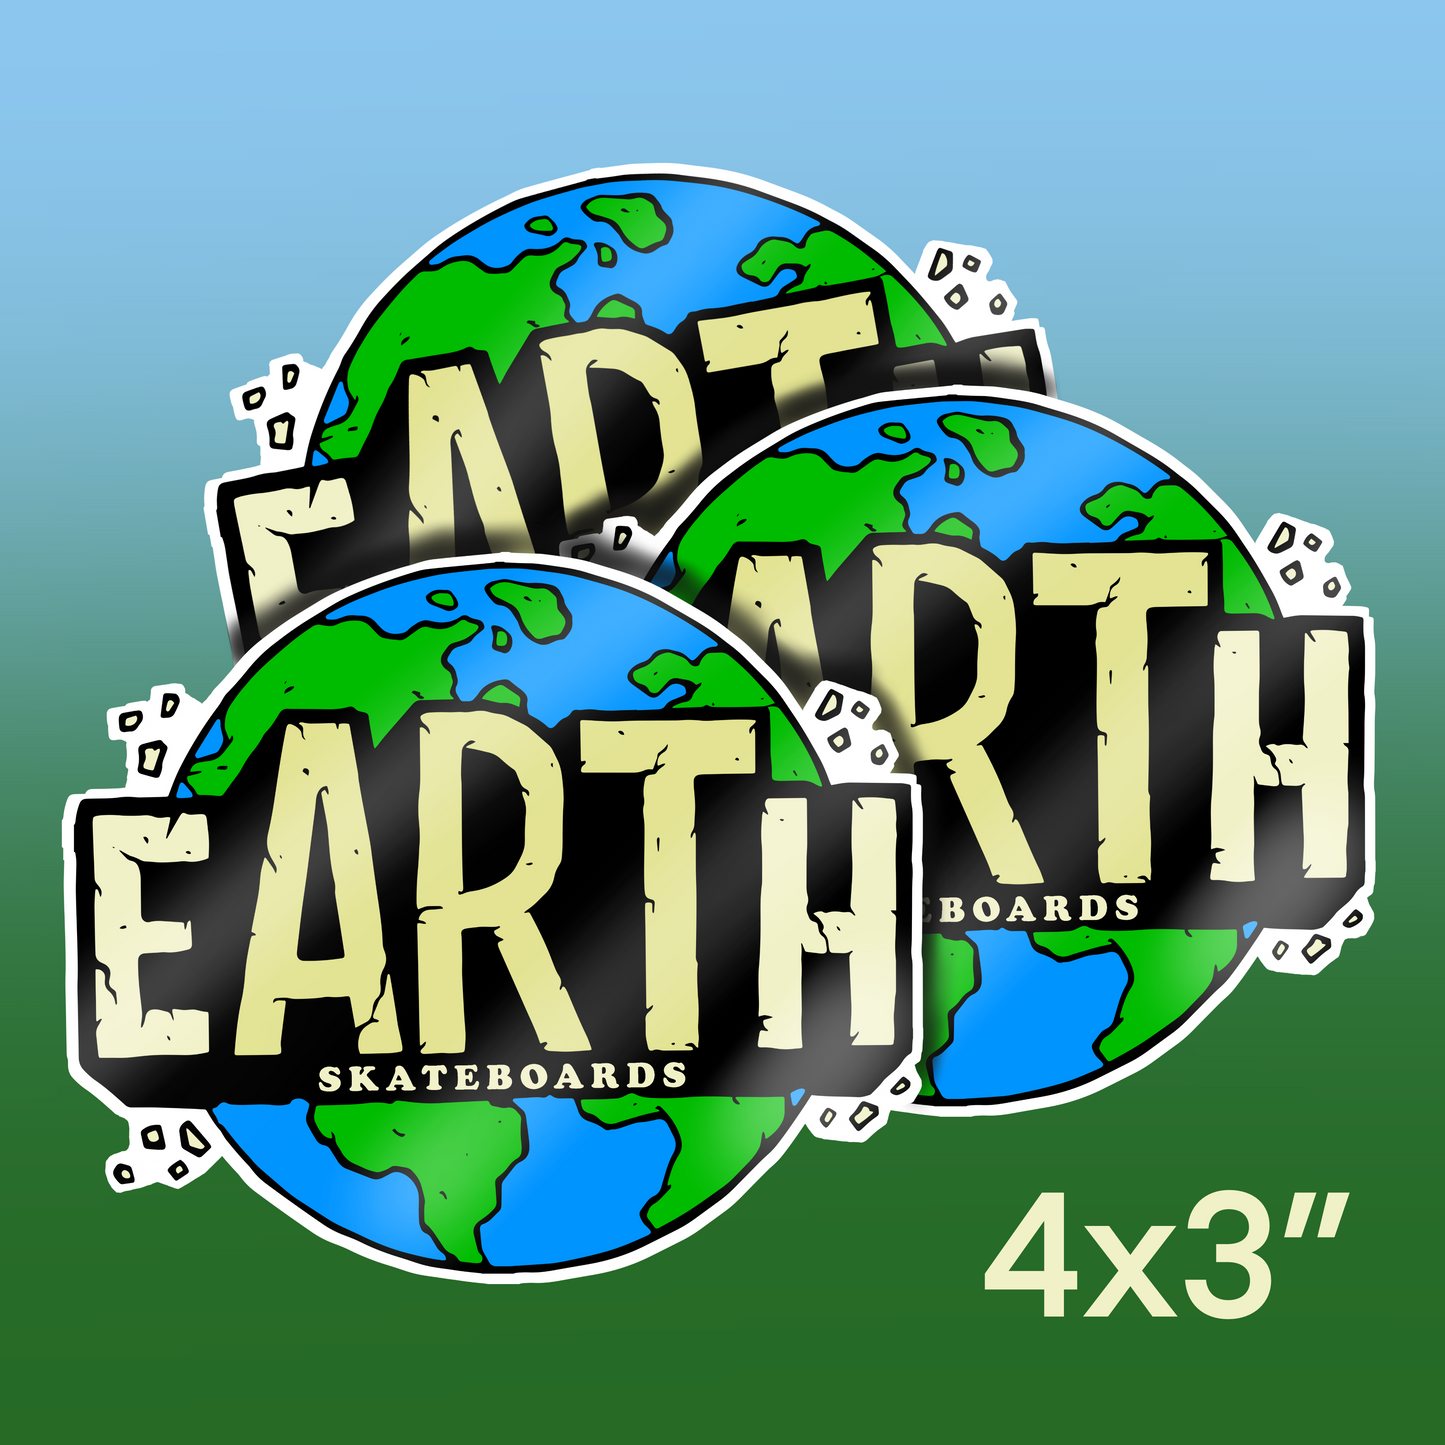 Earth Skateboards Stickers